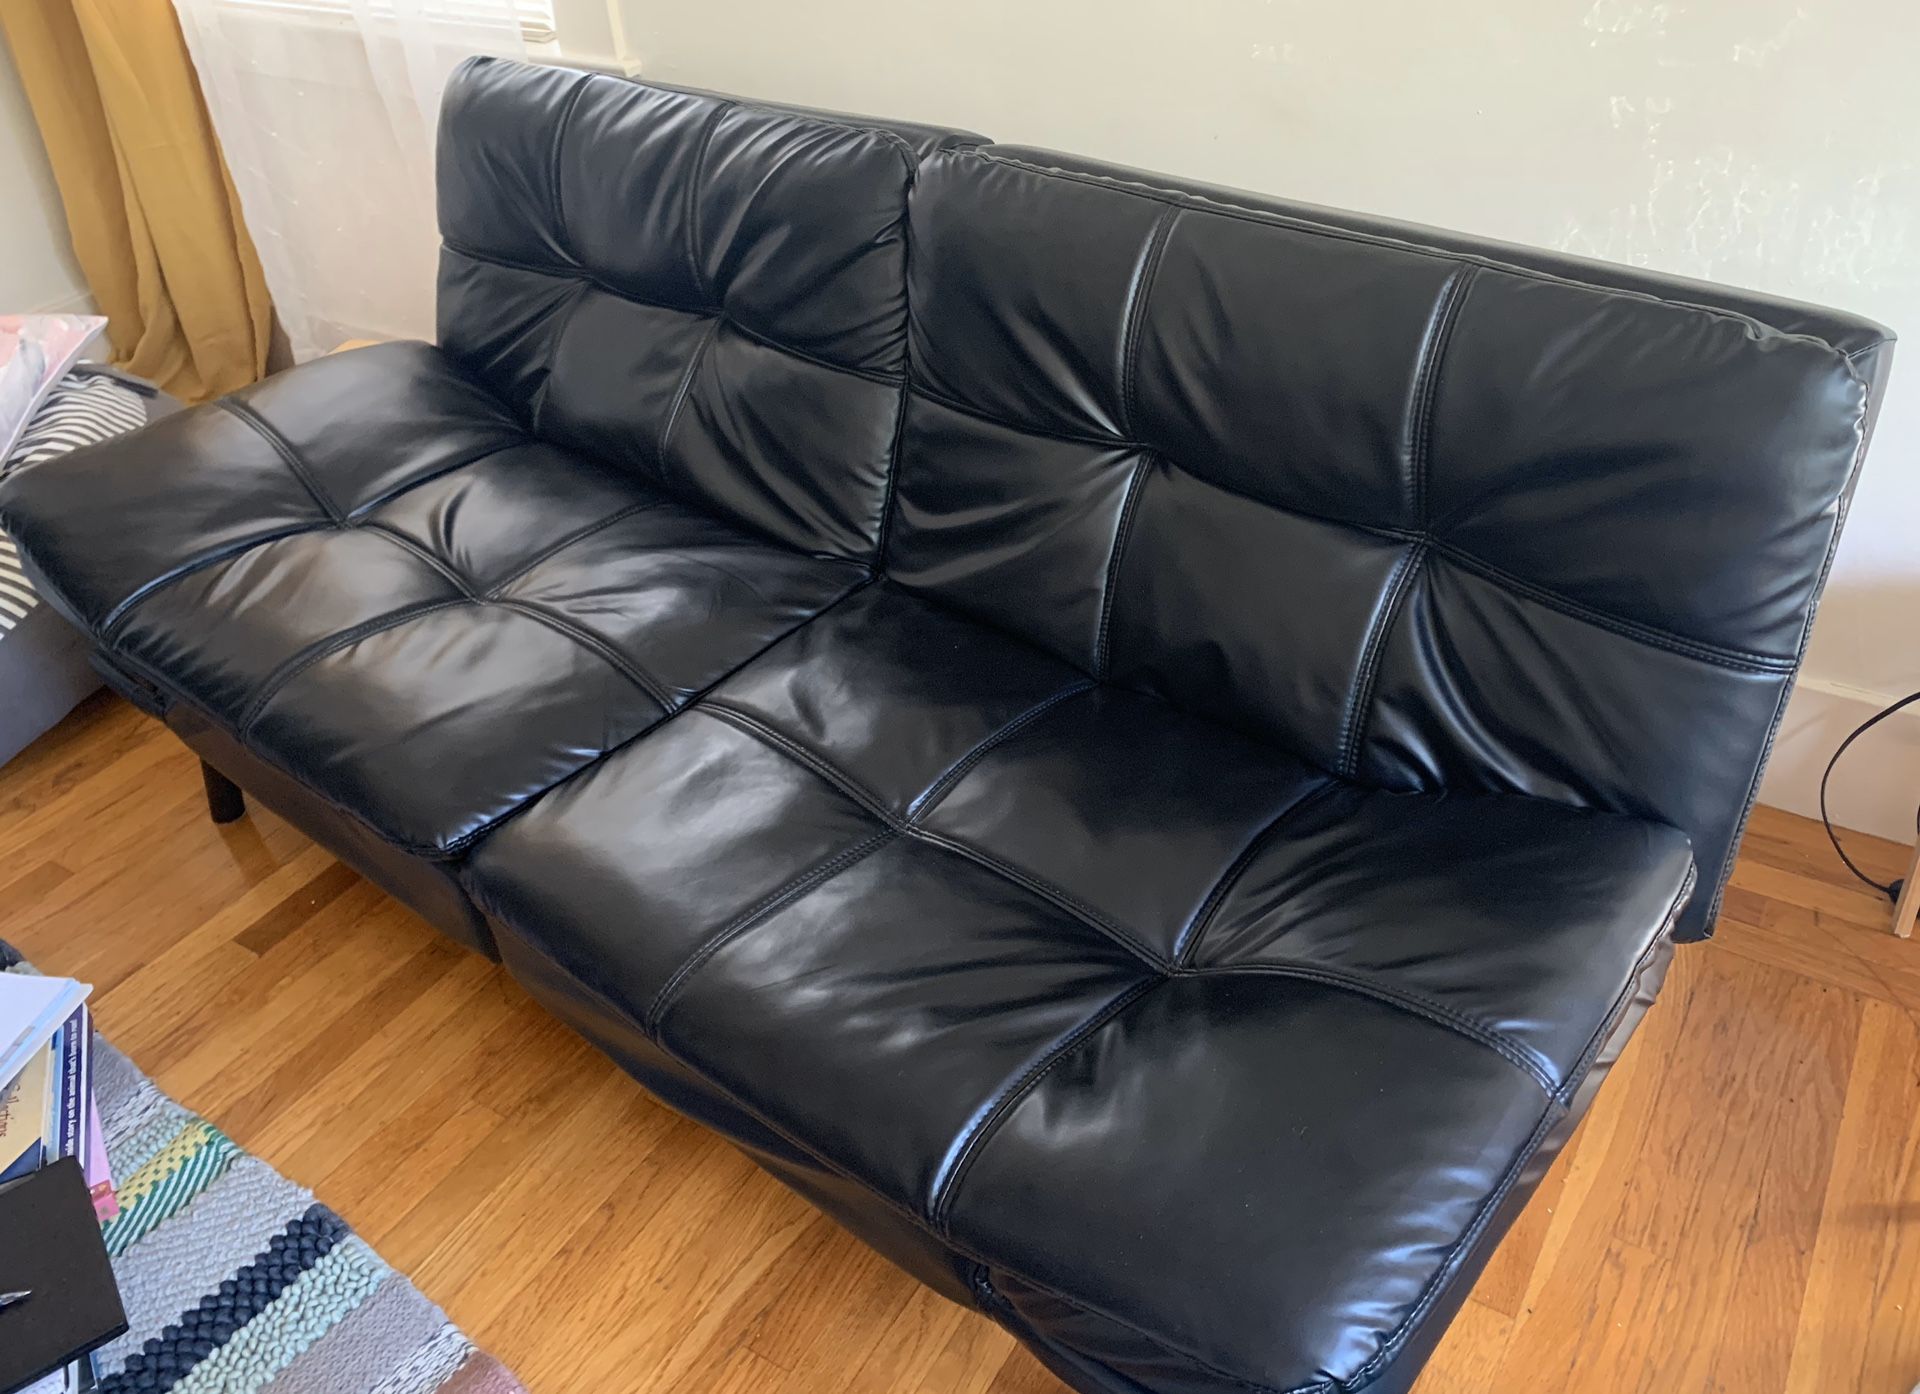 Black faux leather futon -good condition